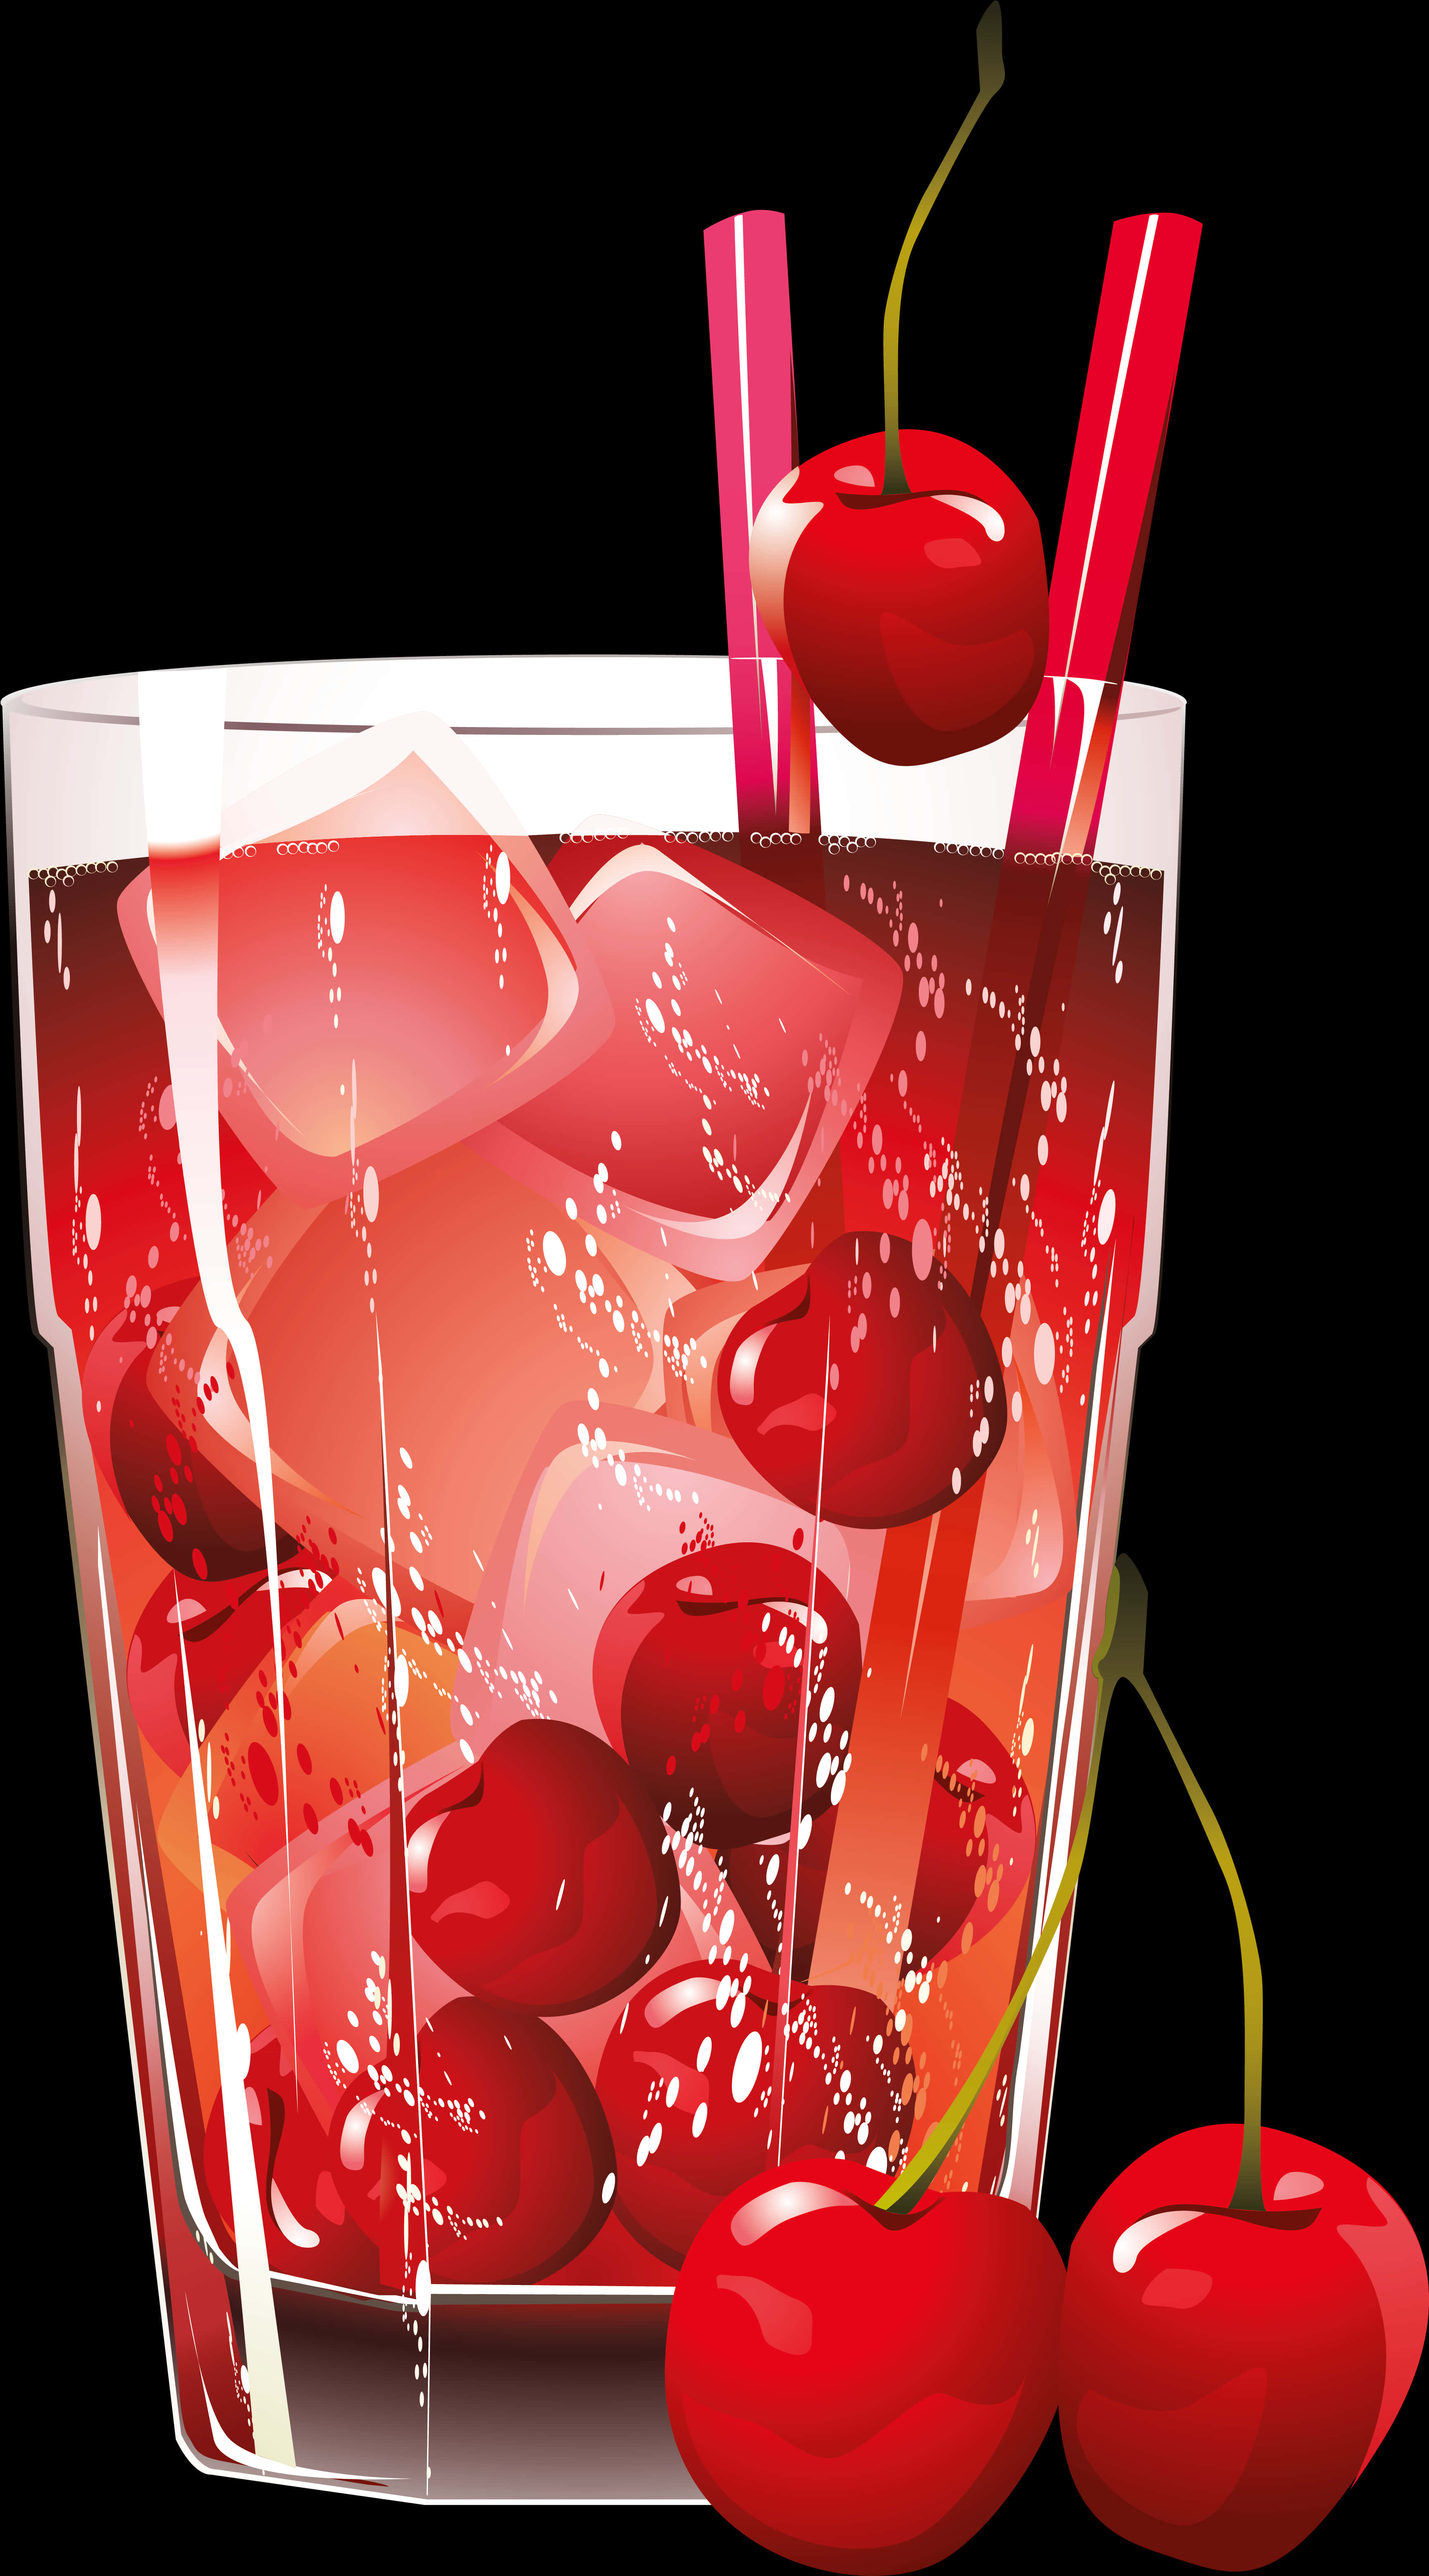 Cherry Juice Glass Illustration